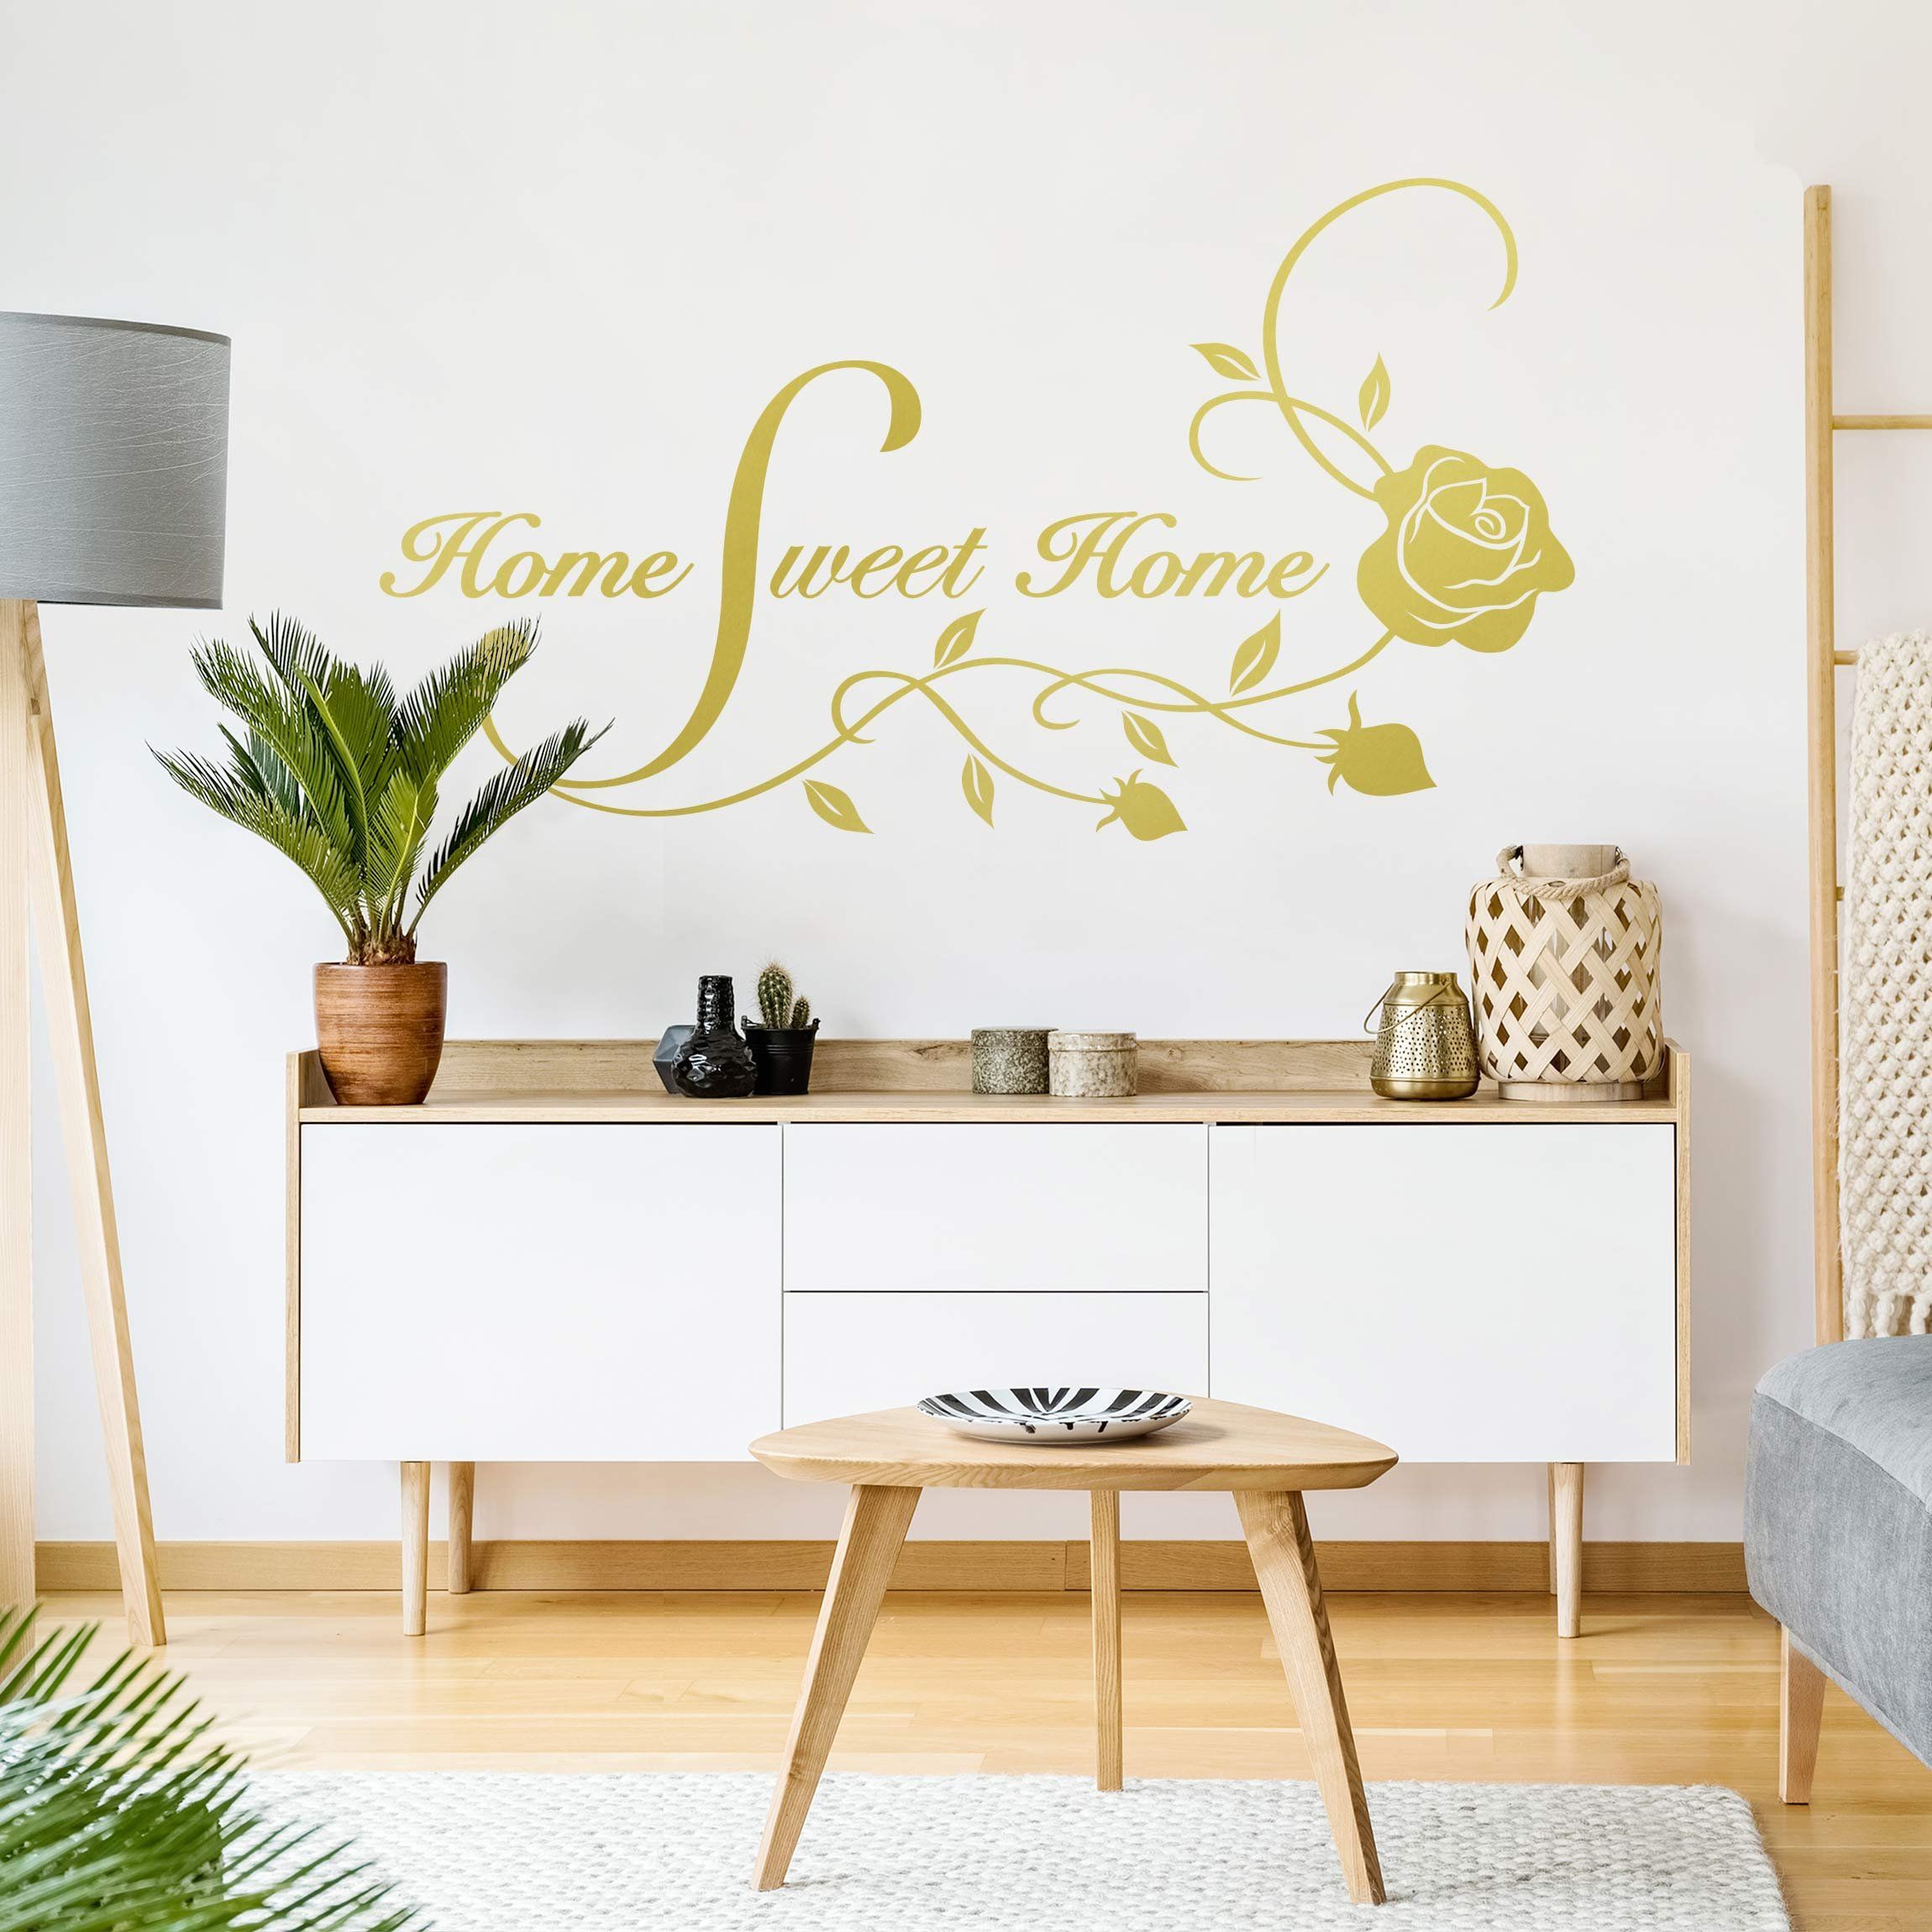 Adesivo murale - Home sweet Home (bicolore) + 4 appendiabiti